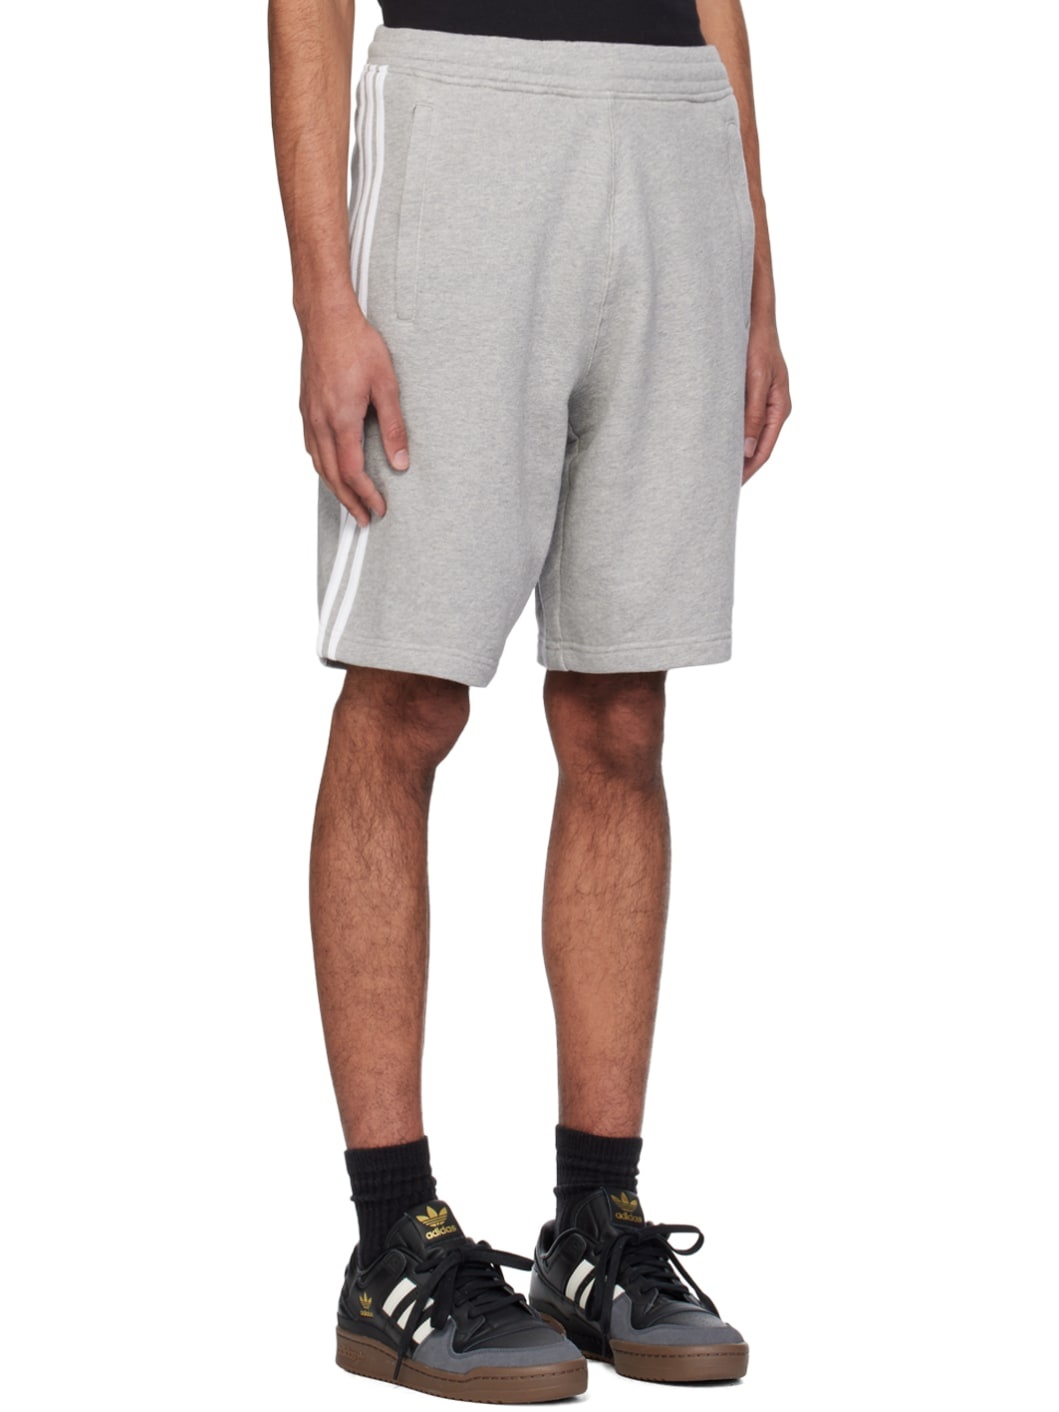 Gray 3-Stripes Shorts - 2